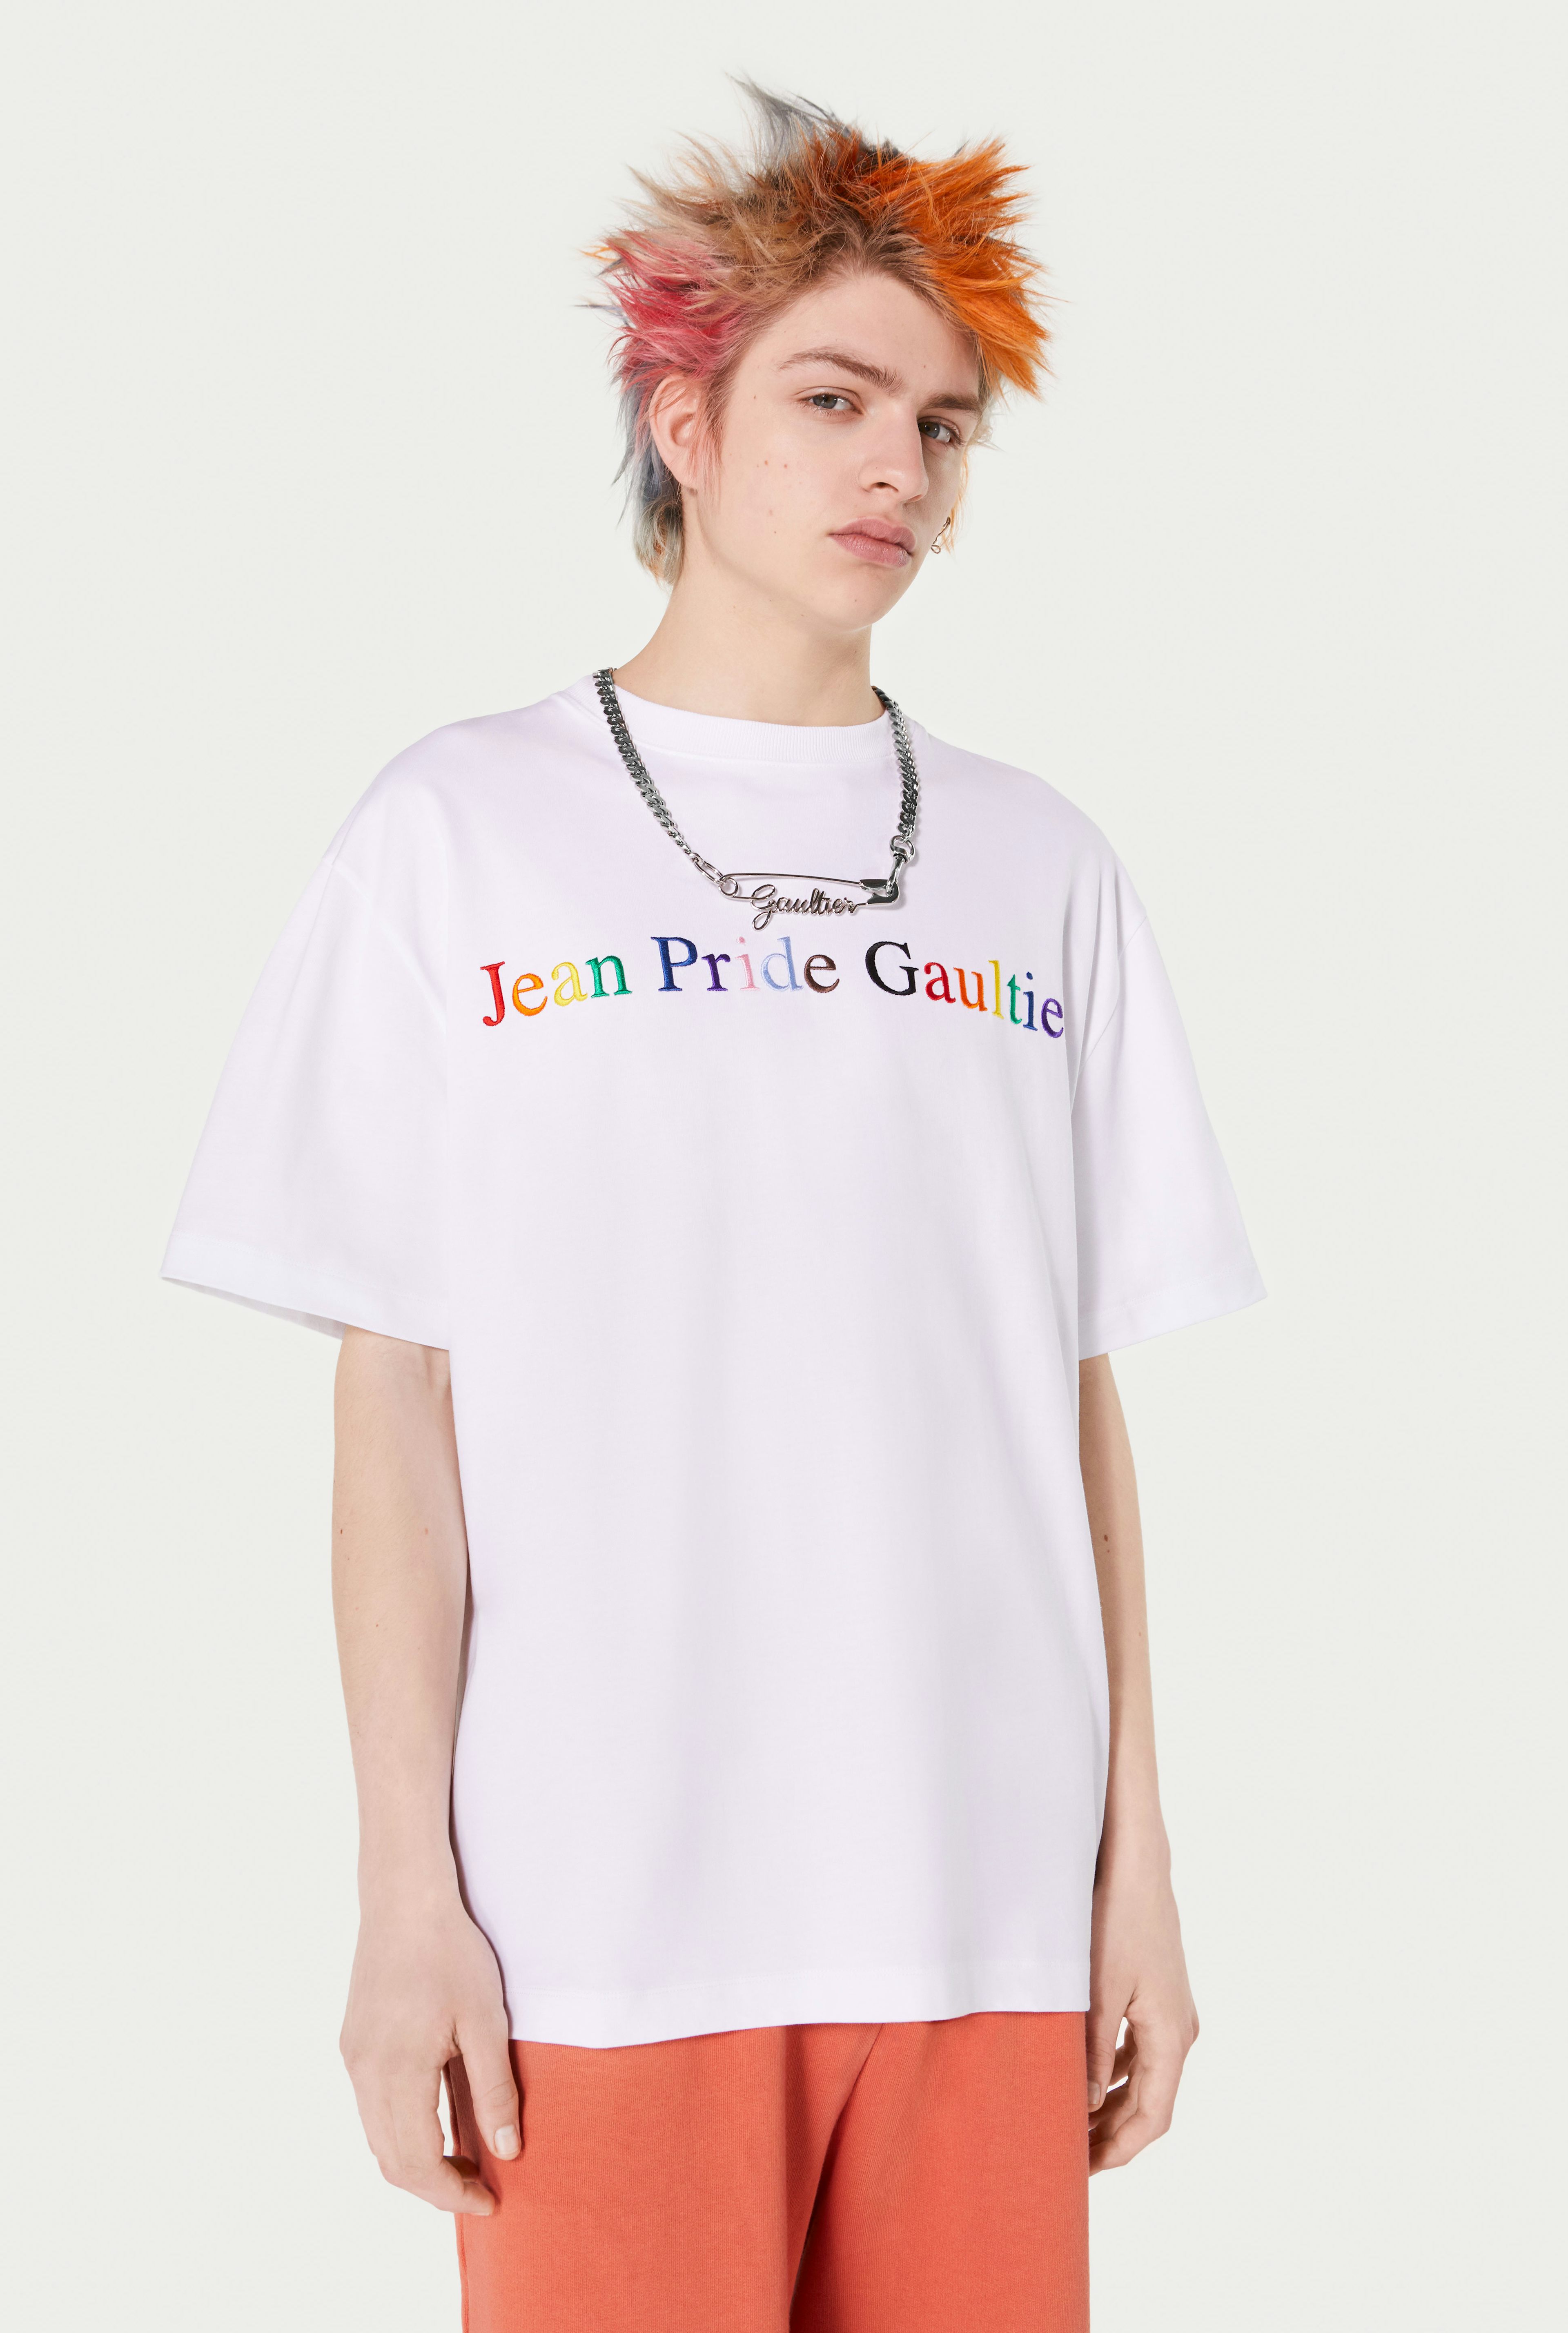 The Jean Pride Gaultier T-Shirt Jean Paul Gaultier